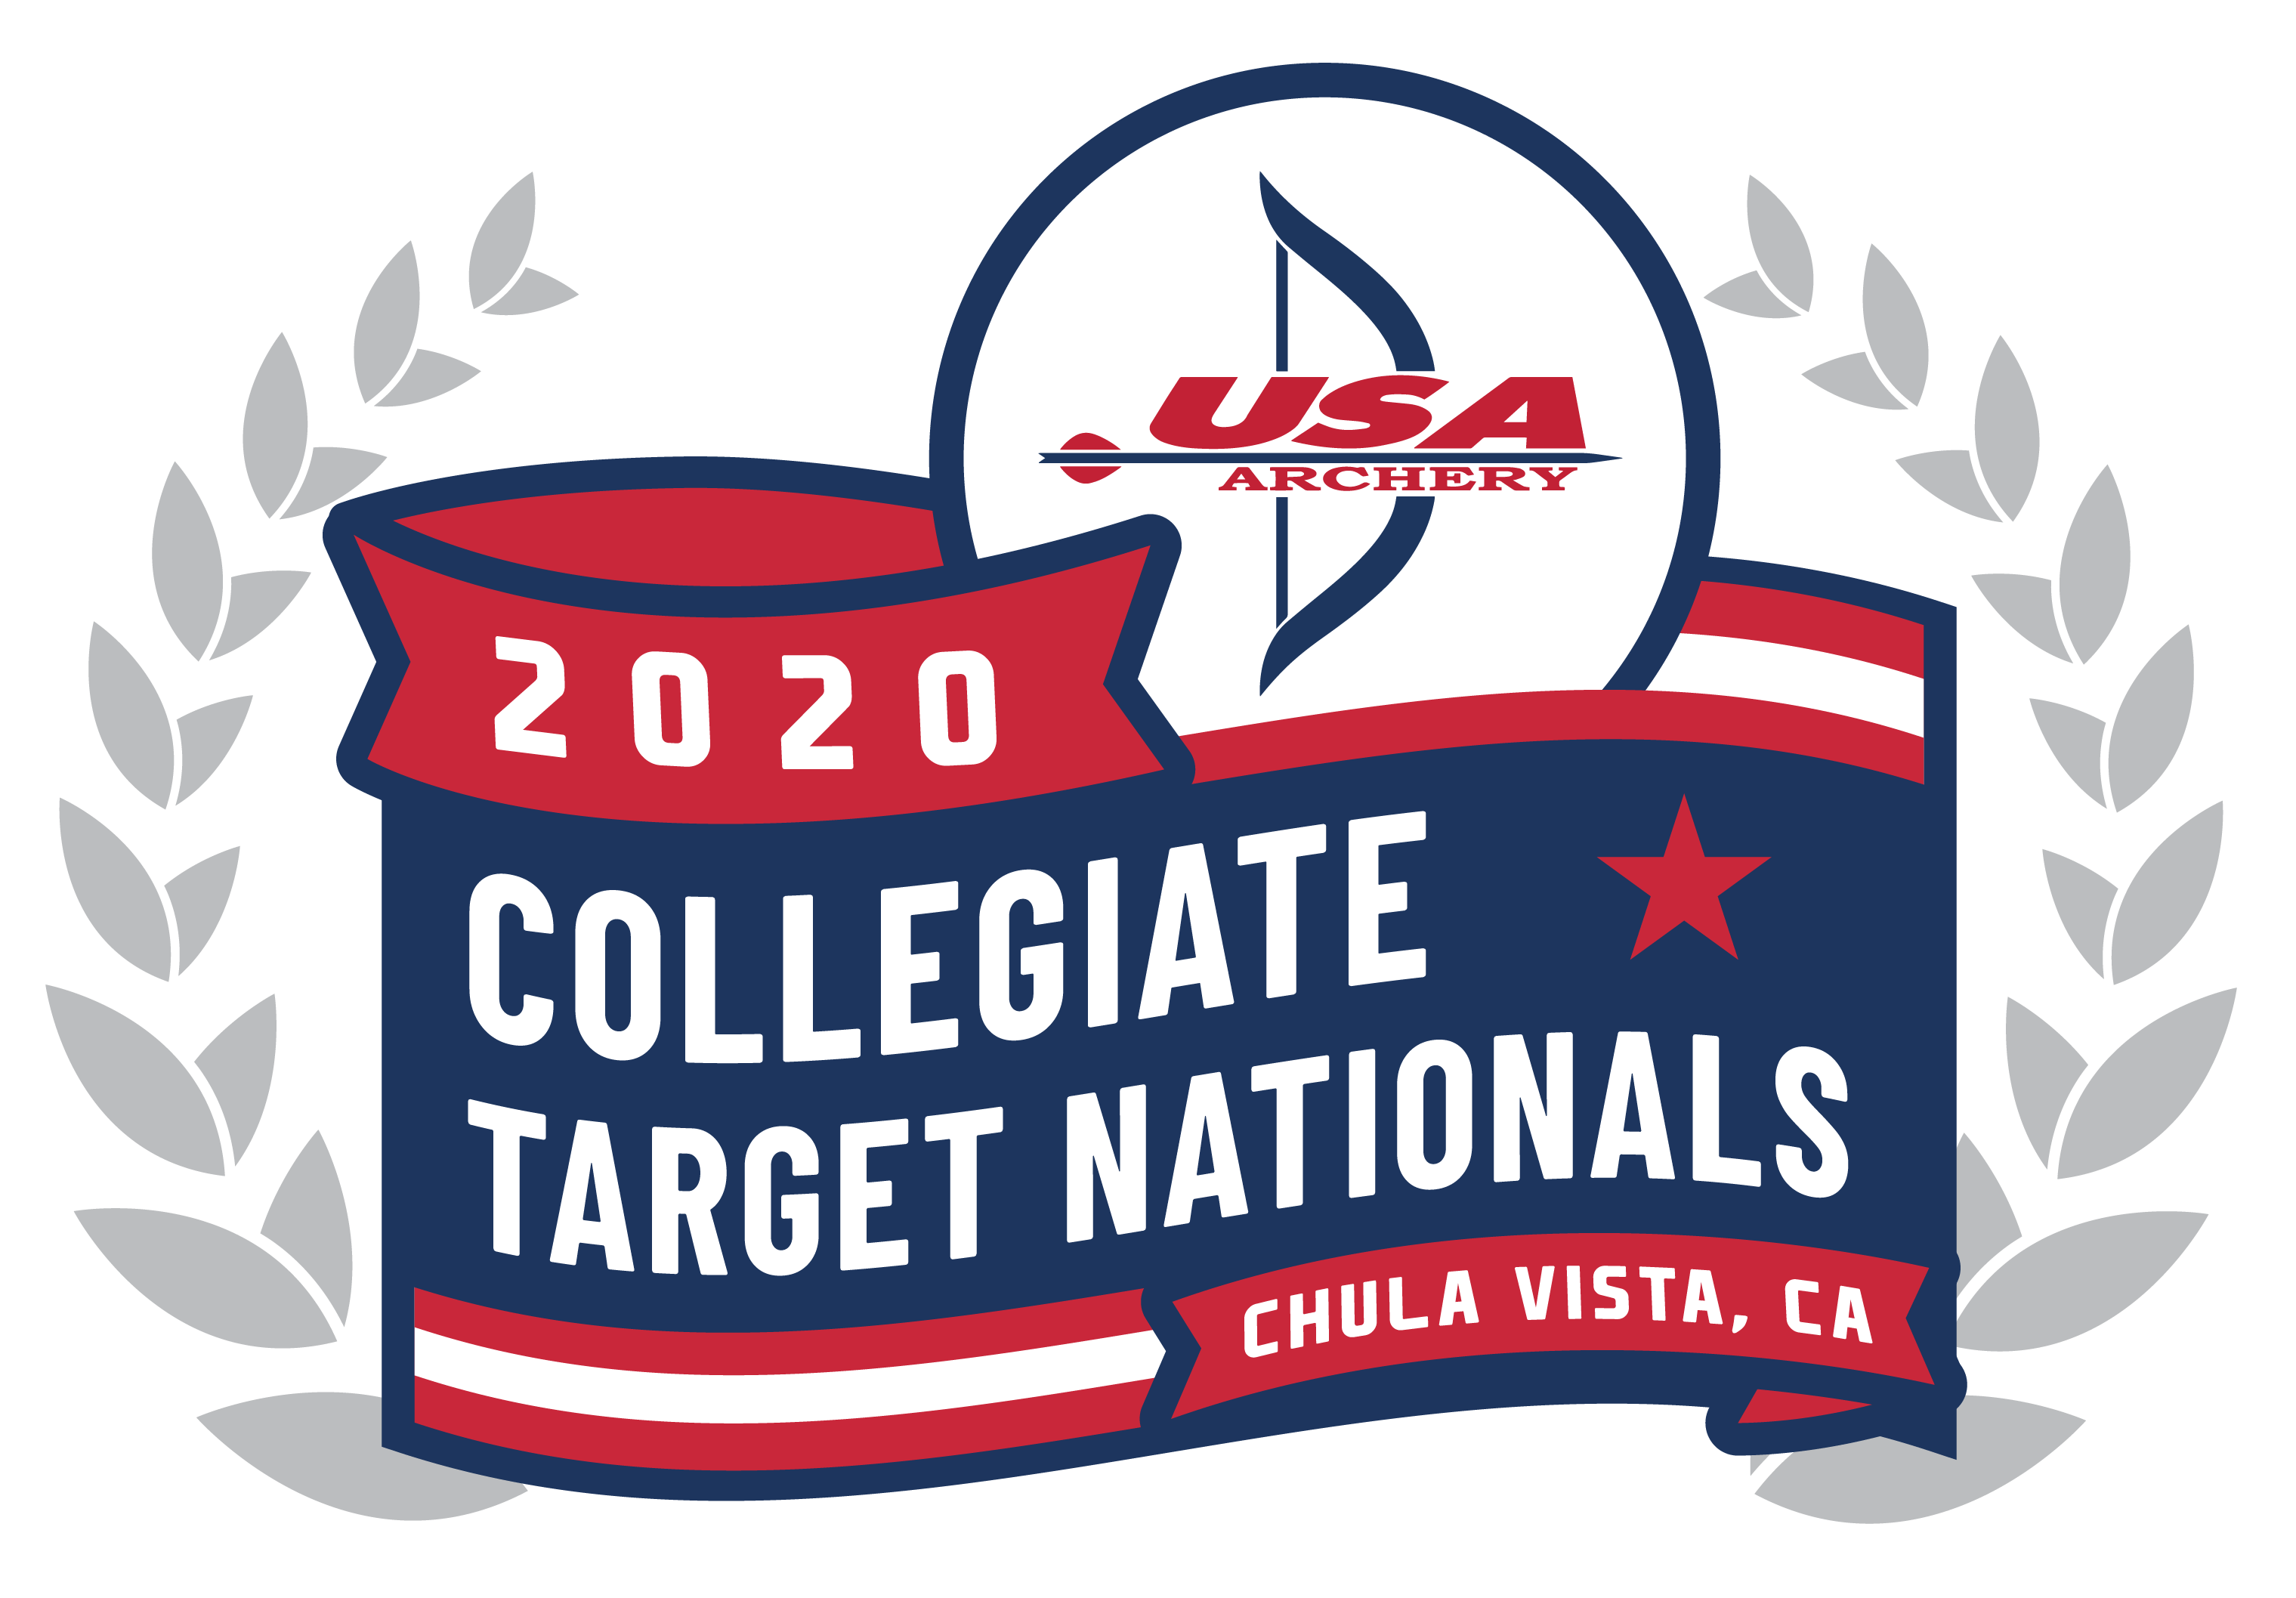 USA Archery Collegiate Target Nationals USA Archery